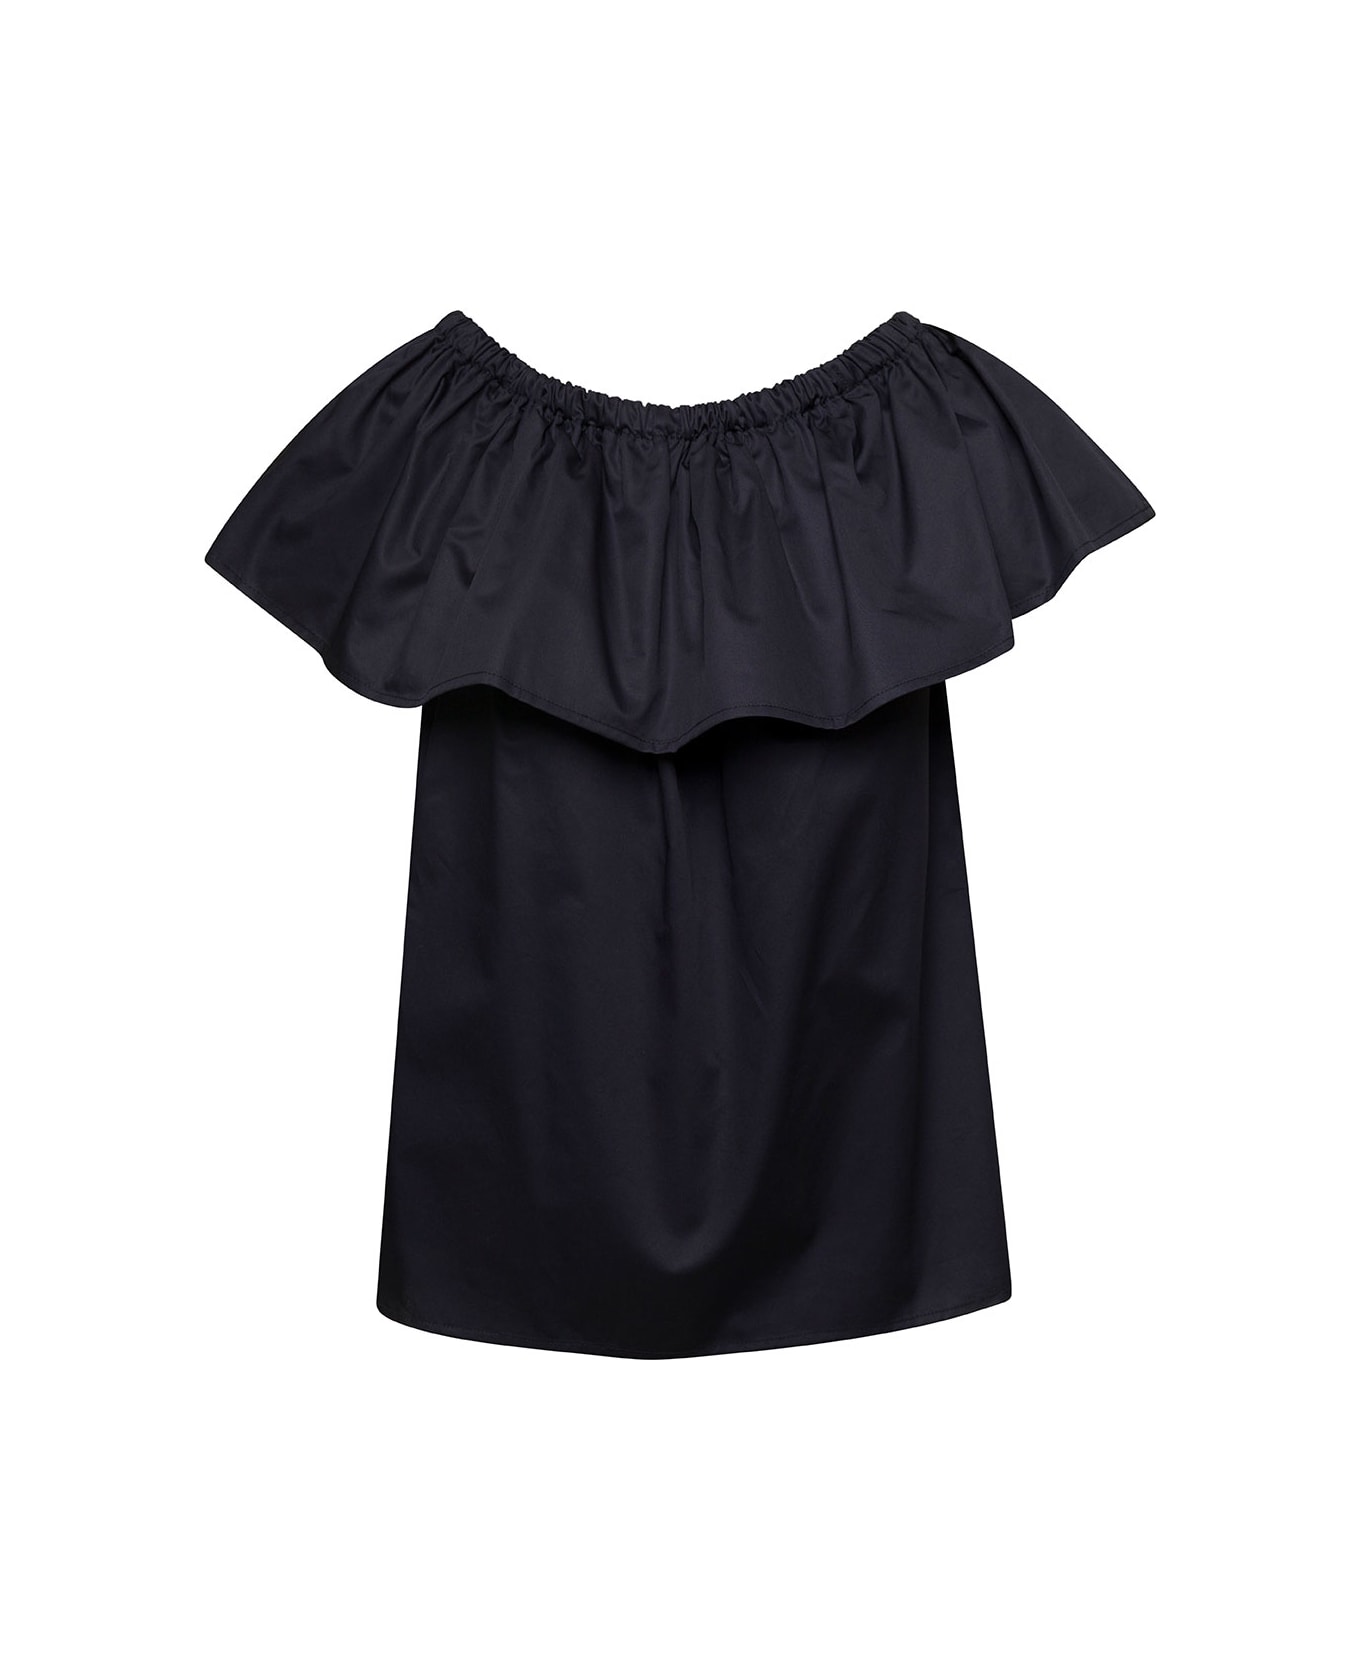 Douuod Black Sleeveless Ruffle Top In Cotton Woman - Black